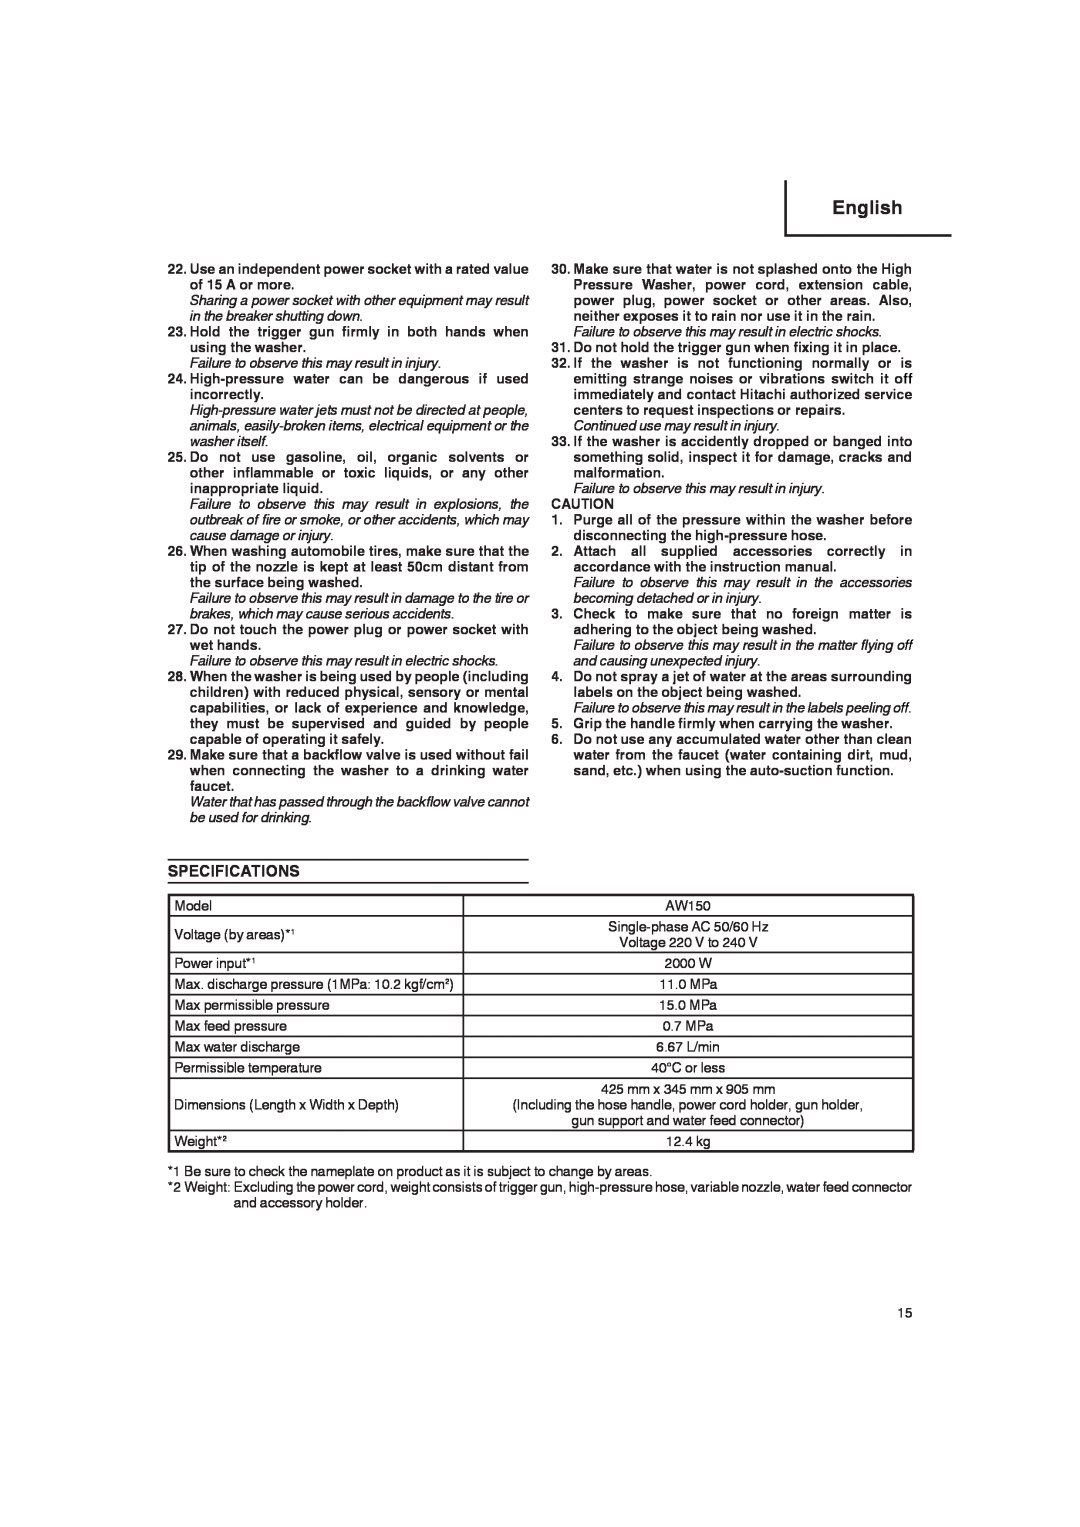 Hitachi Koki USA AW 150 manual Specifications, English 